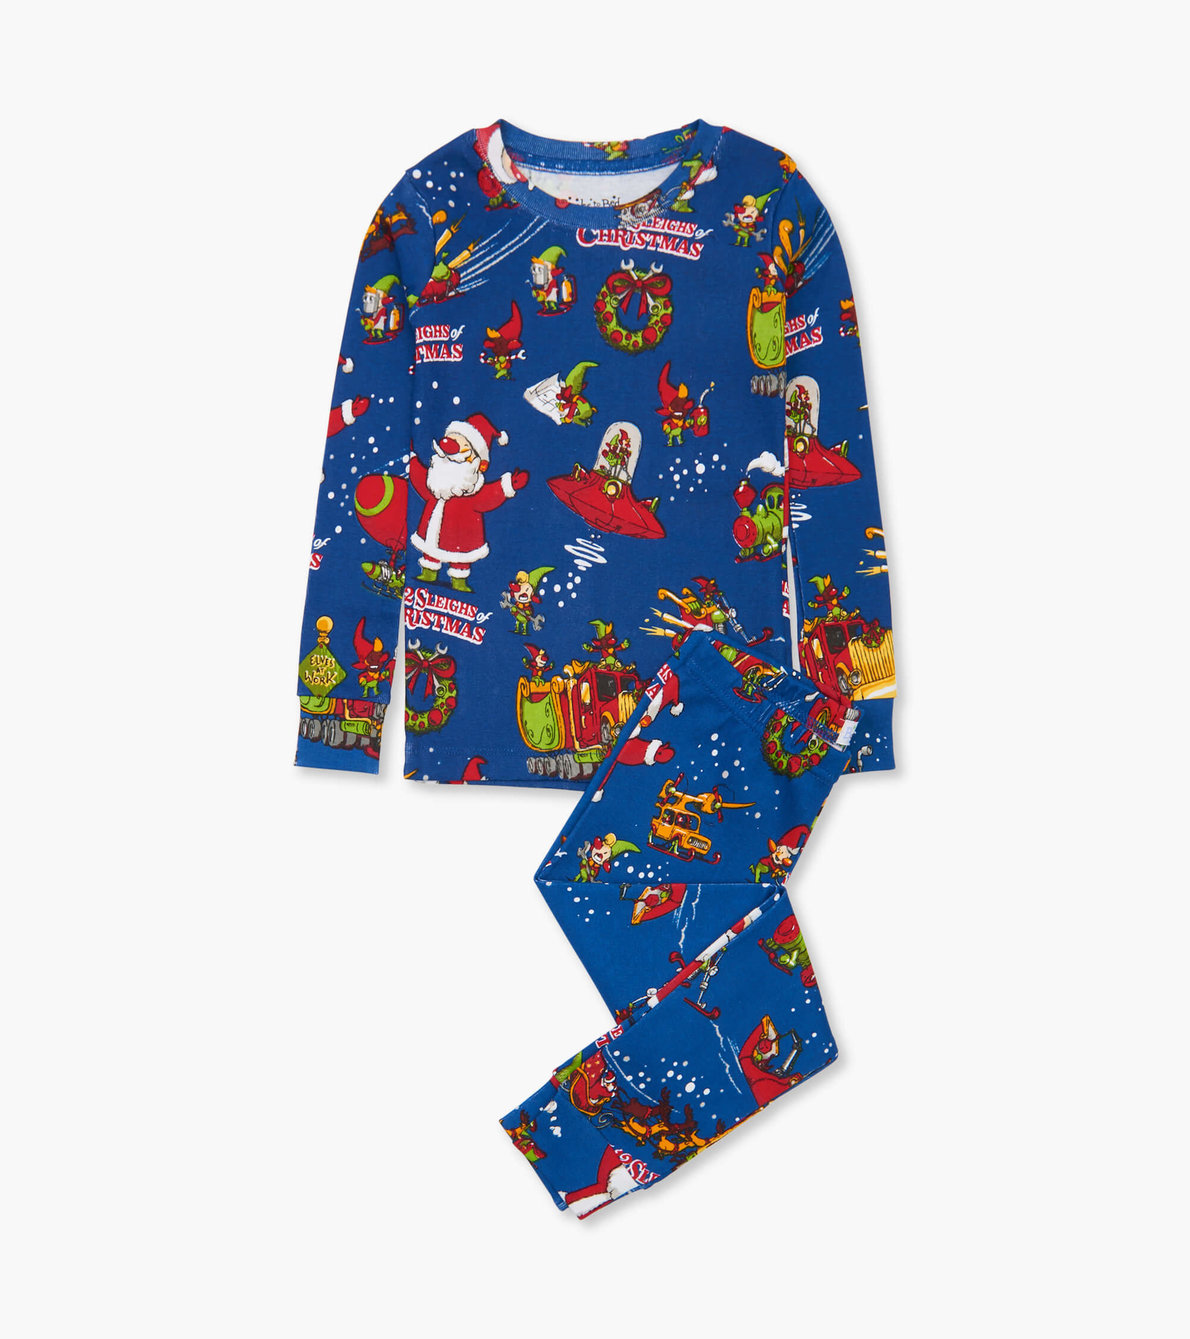 View larger image of The 12 Sleighs of Christmas Pajama Set